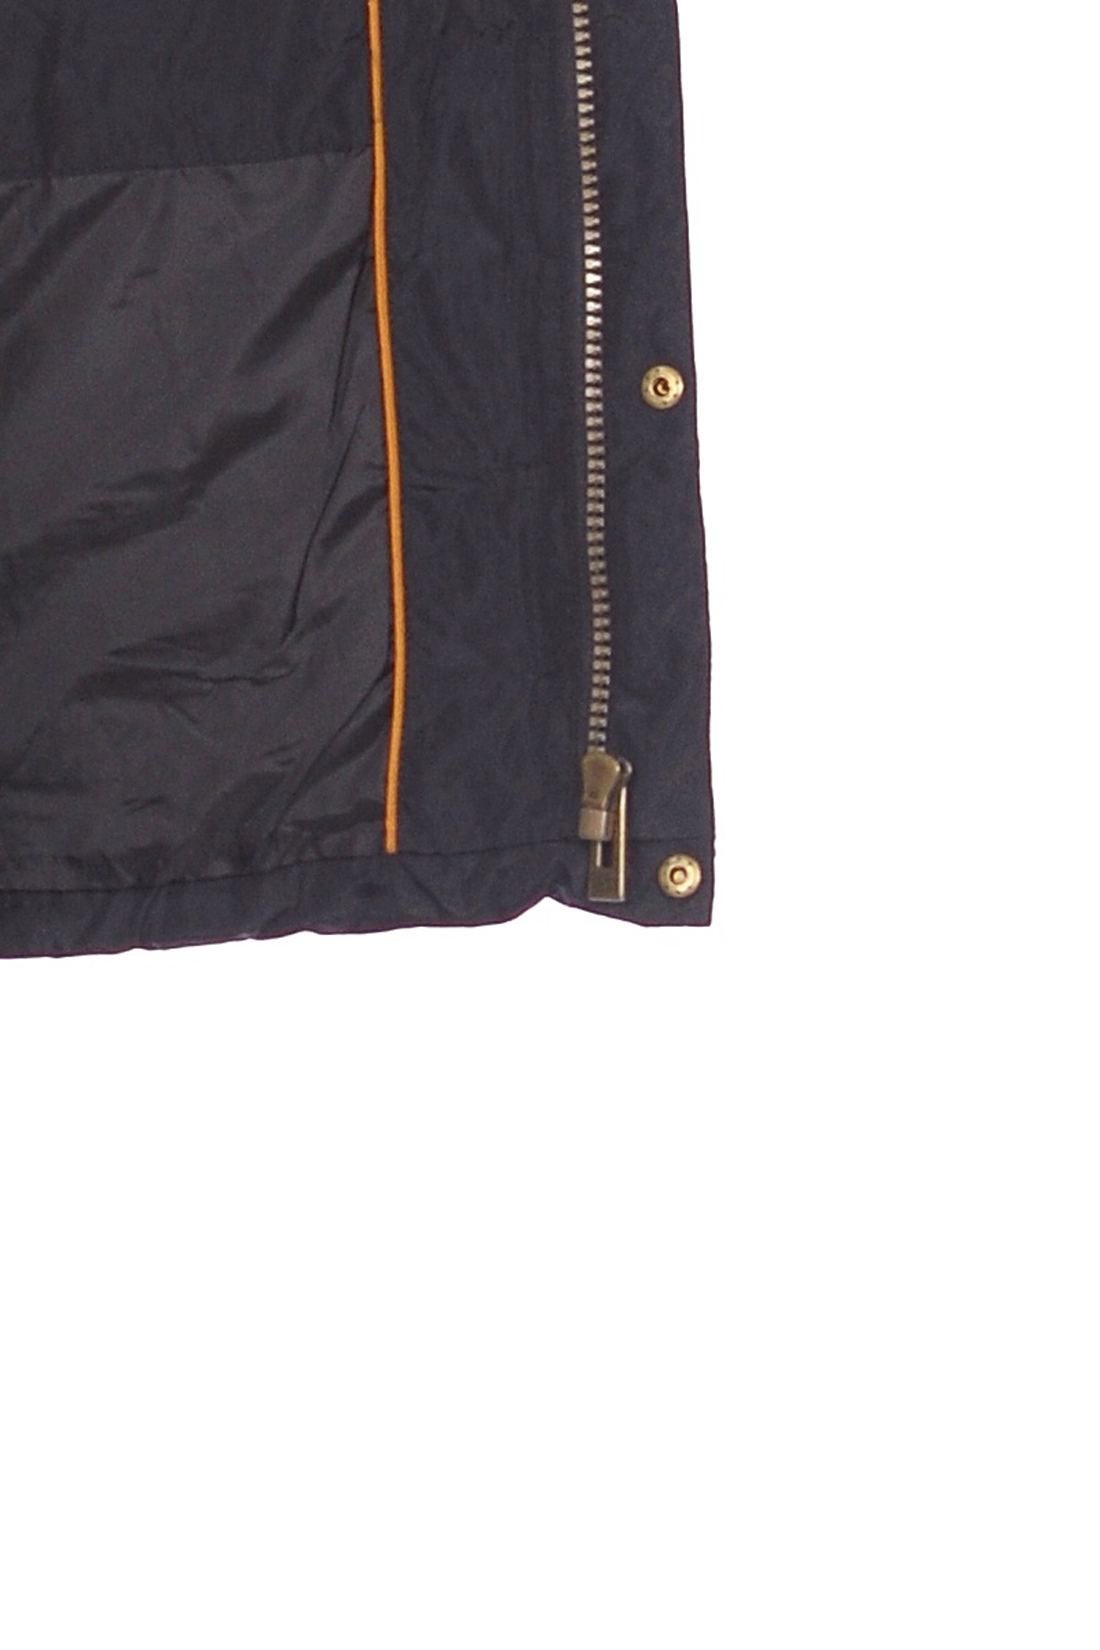 Пуховик с накладным карманом (арт. baon B508506), размер L, цвет черный Пуховик с накладным карманом (арт. baon B508506) - фото 4